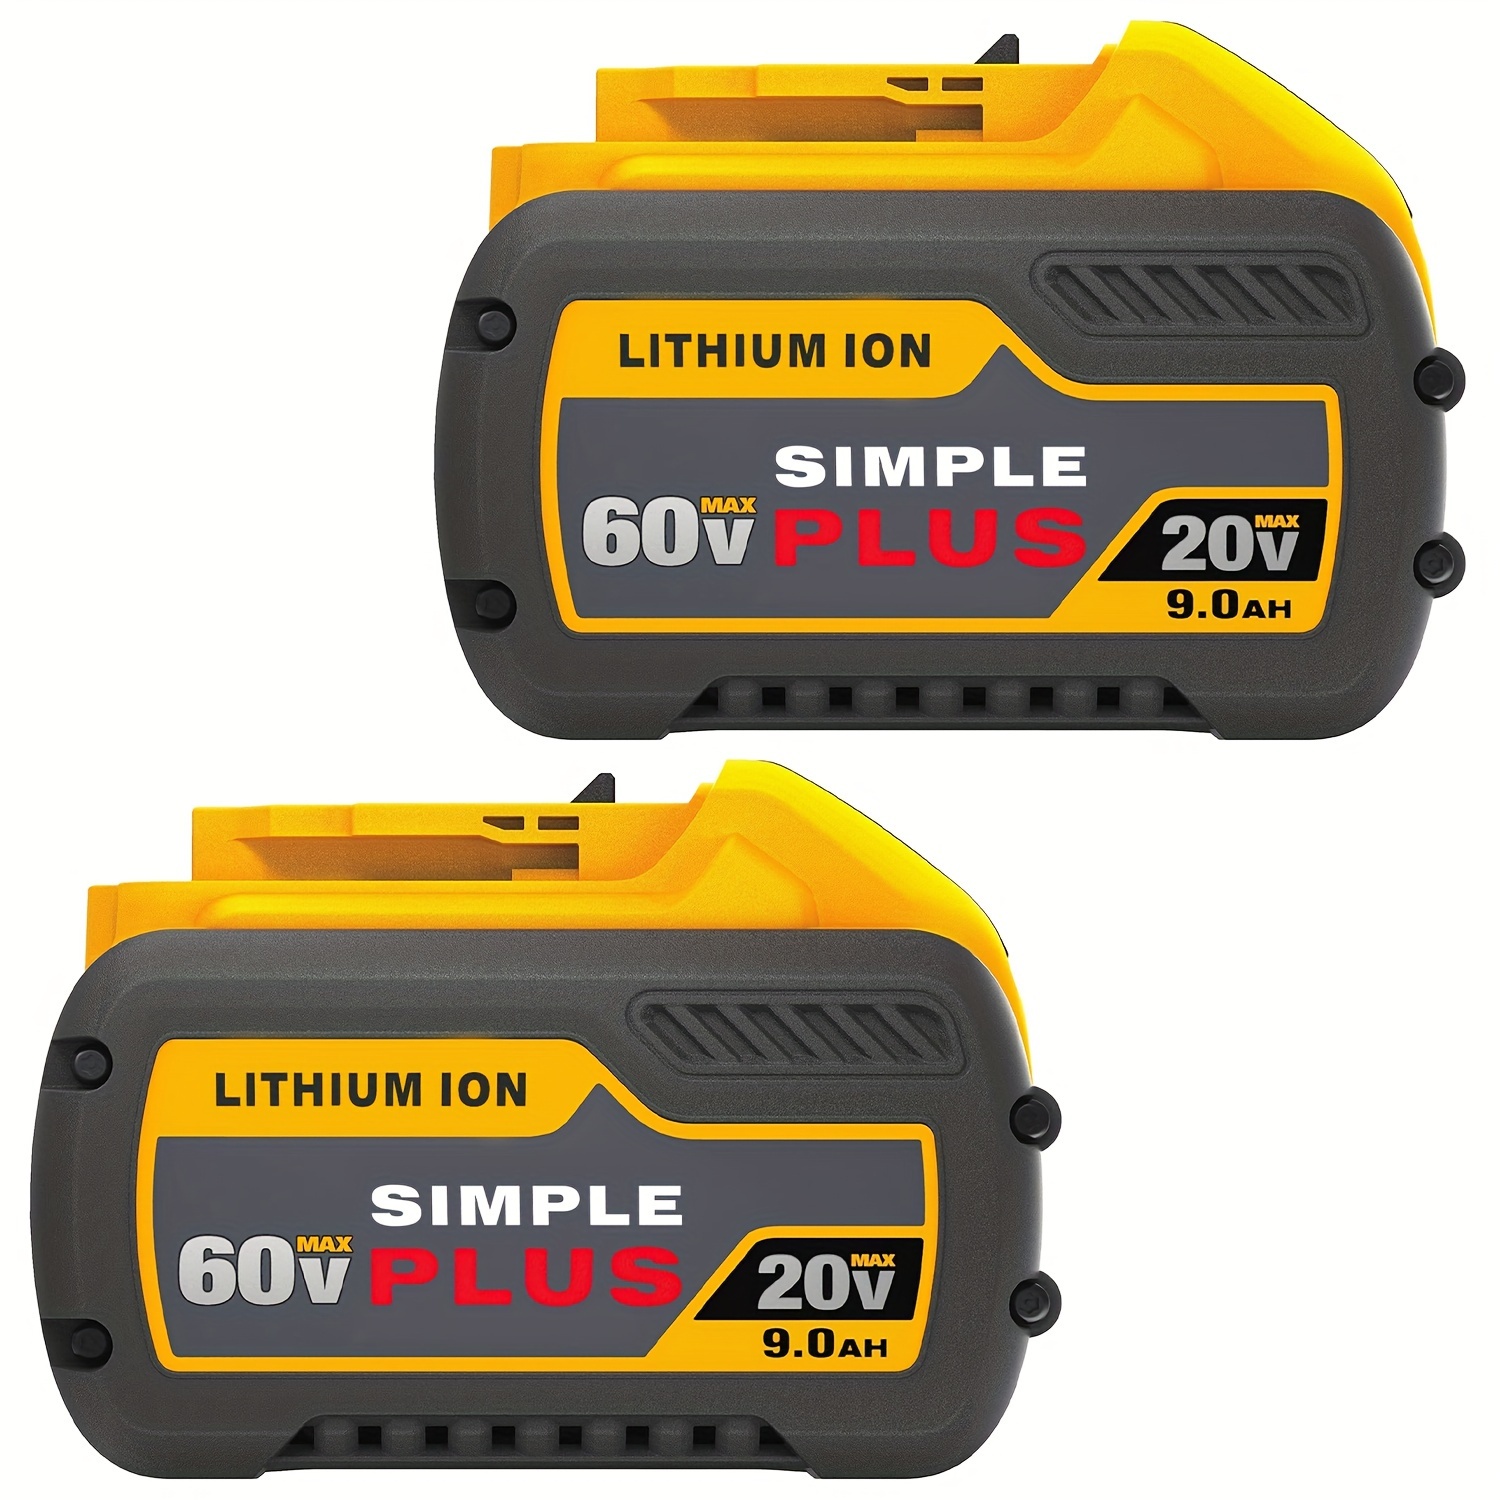 

2pcs Replace For 20v/60v 9.0ah Battery Compatible With 20v/60v Power Tools, Compatible With 20/60v Battery Dcb606 Dcb609 Dcb612 And 20v/60v